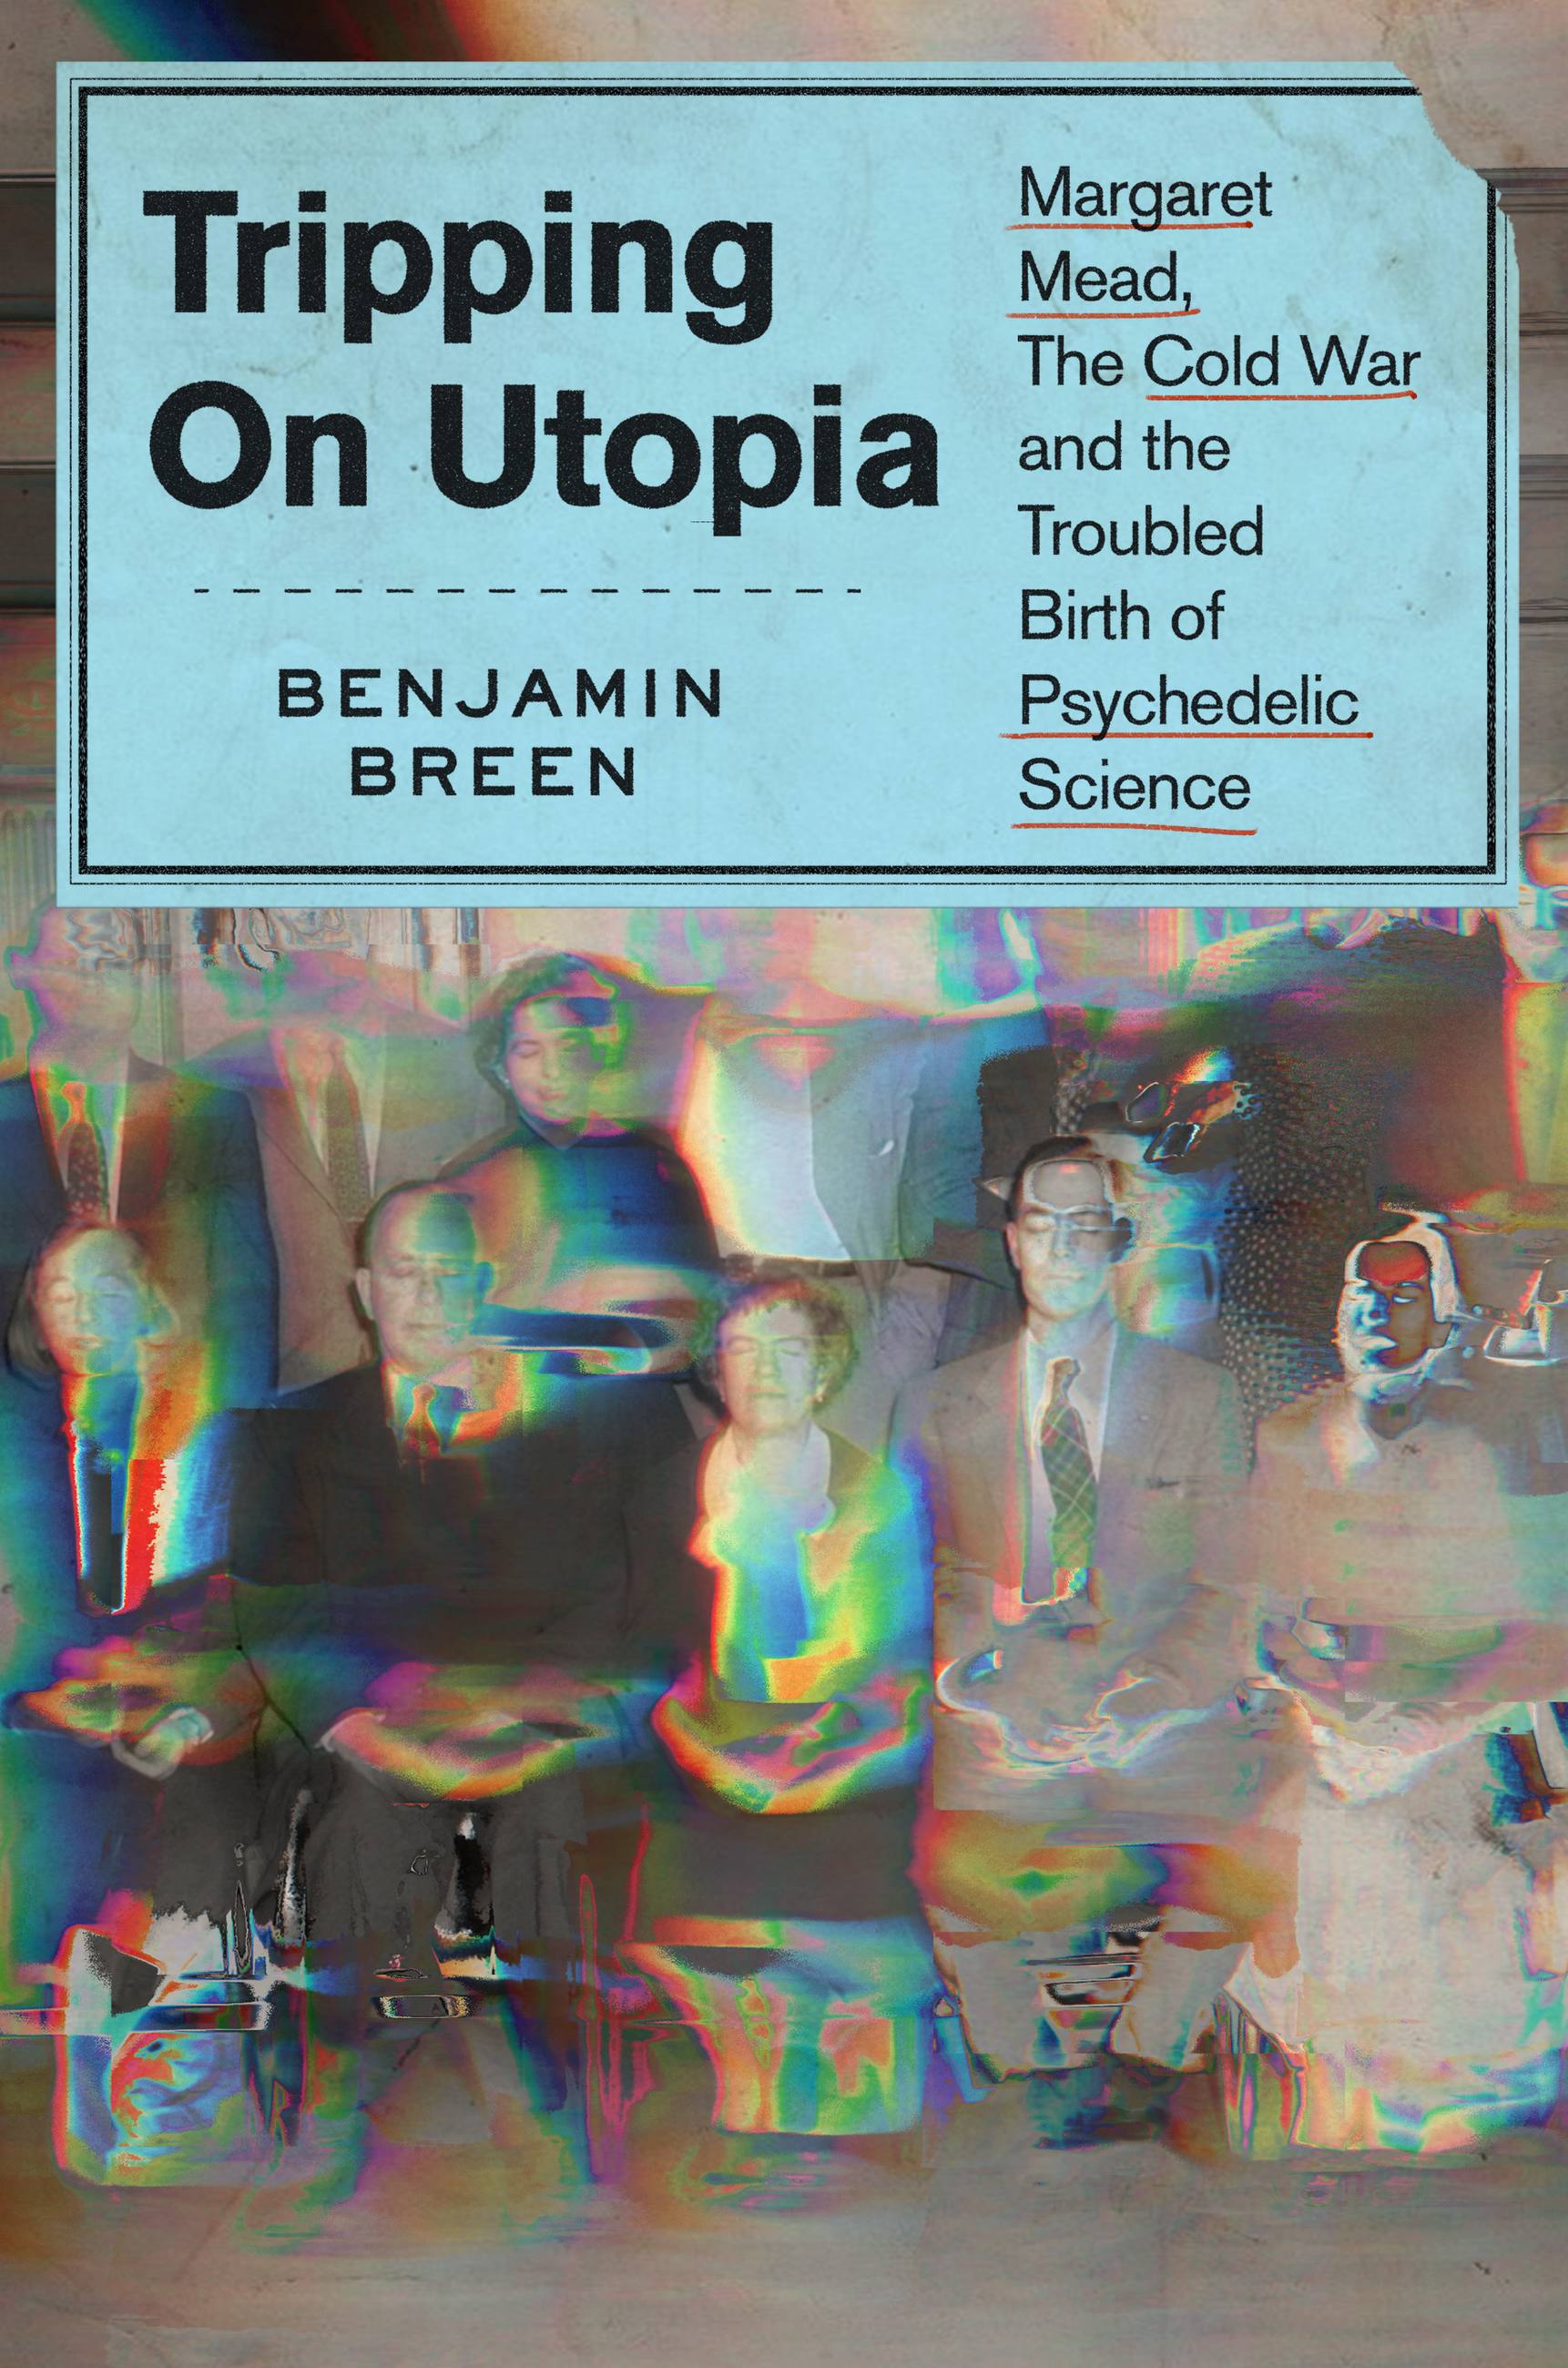 Tripping on Utopia by Benjamin Breen